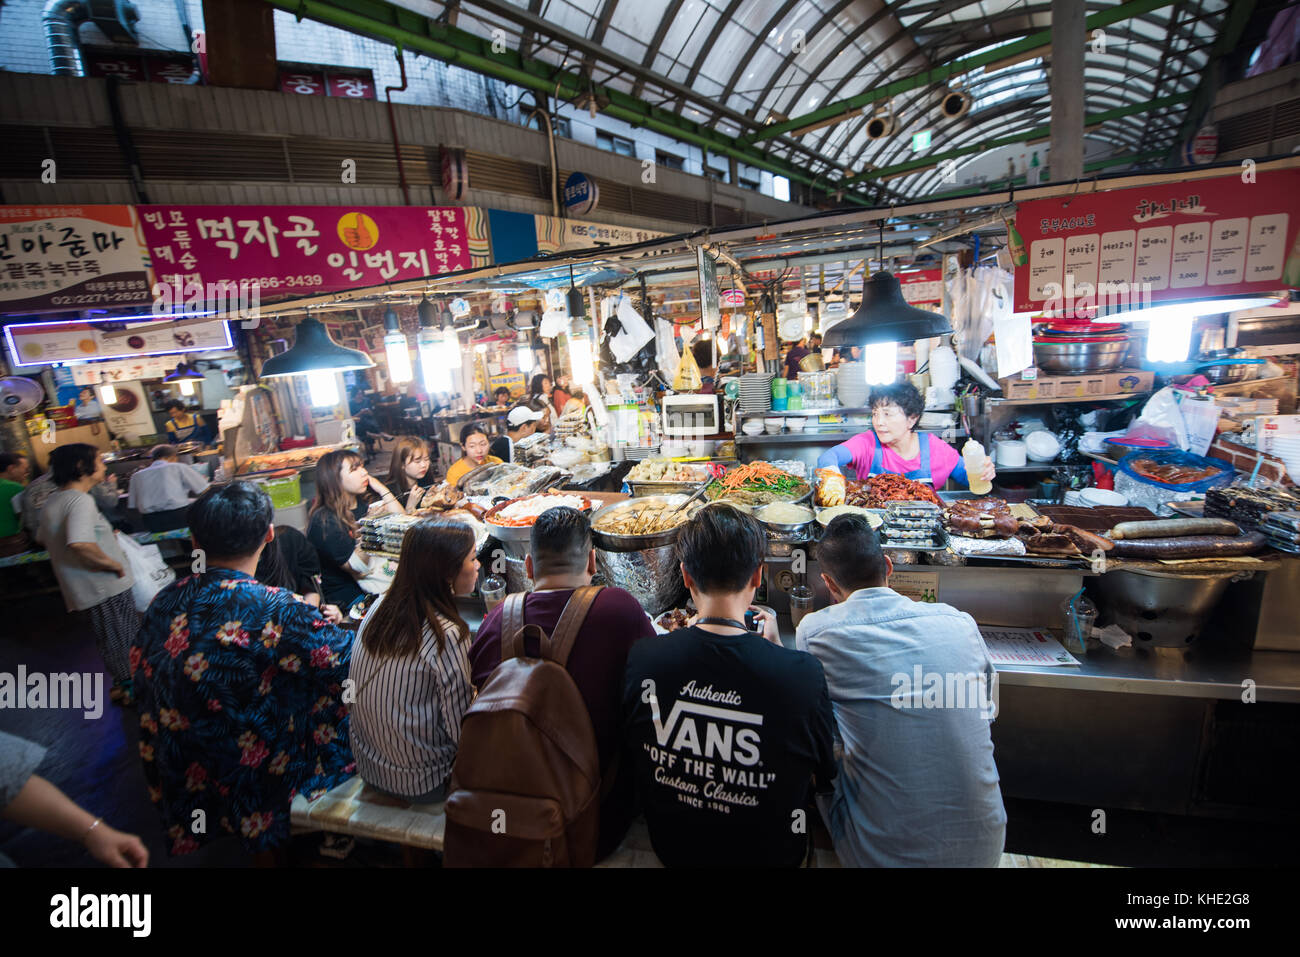 Koreans sitting and eating at a street food vendor in Kwangjang Food Market, Seoul 2017. Stock Photo